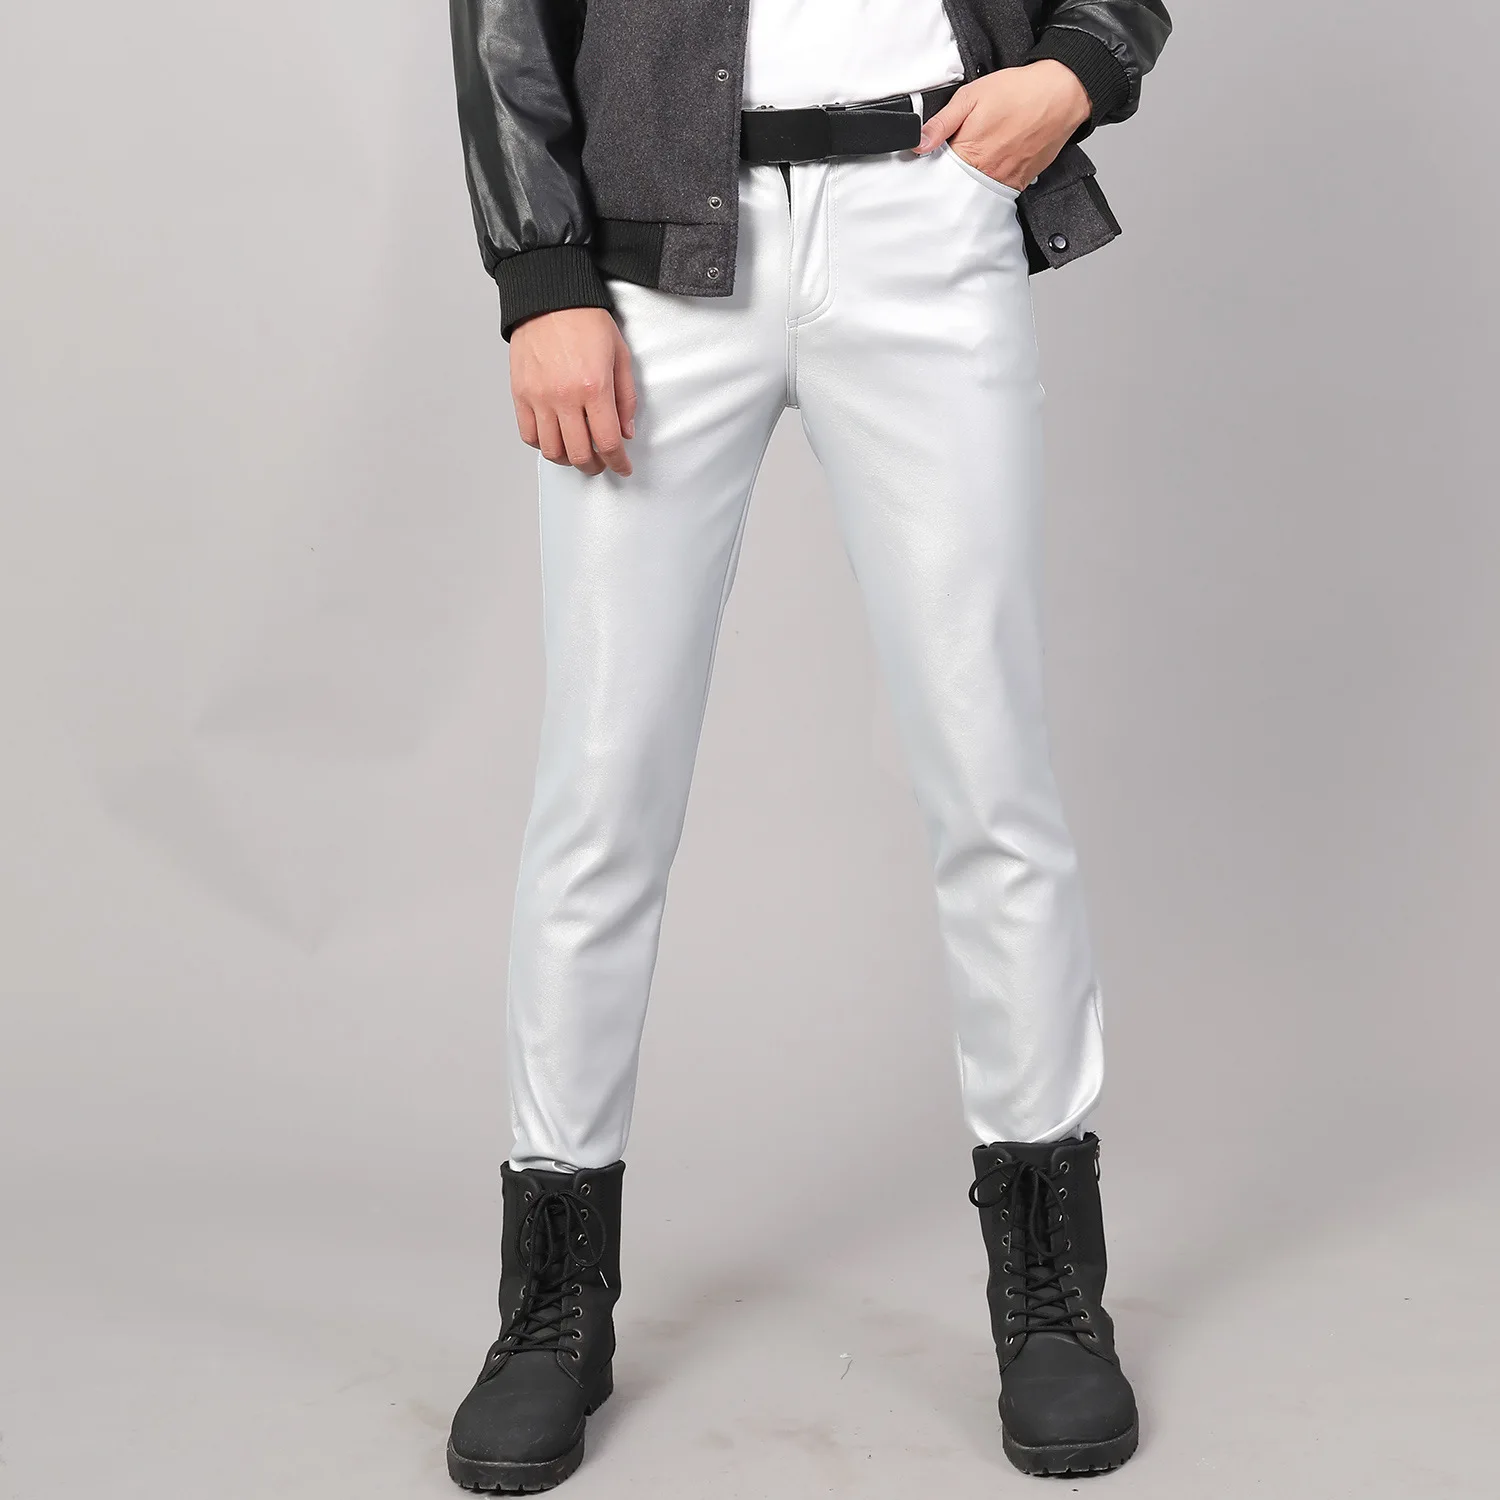 Mens Pant Elastic Slim Fit Fashionable and Moisture Resistant White Dance Performance Bar Hair Salon Leather Pants for Men 3